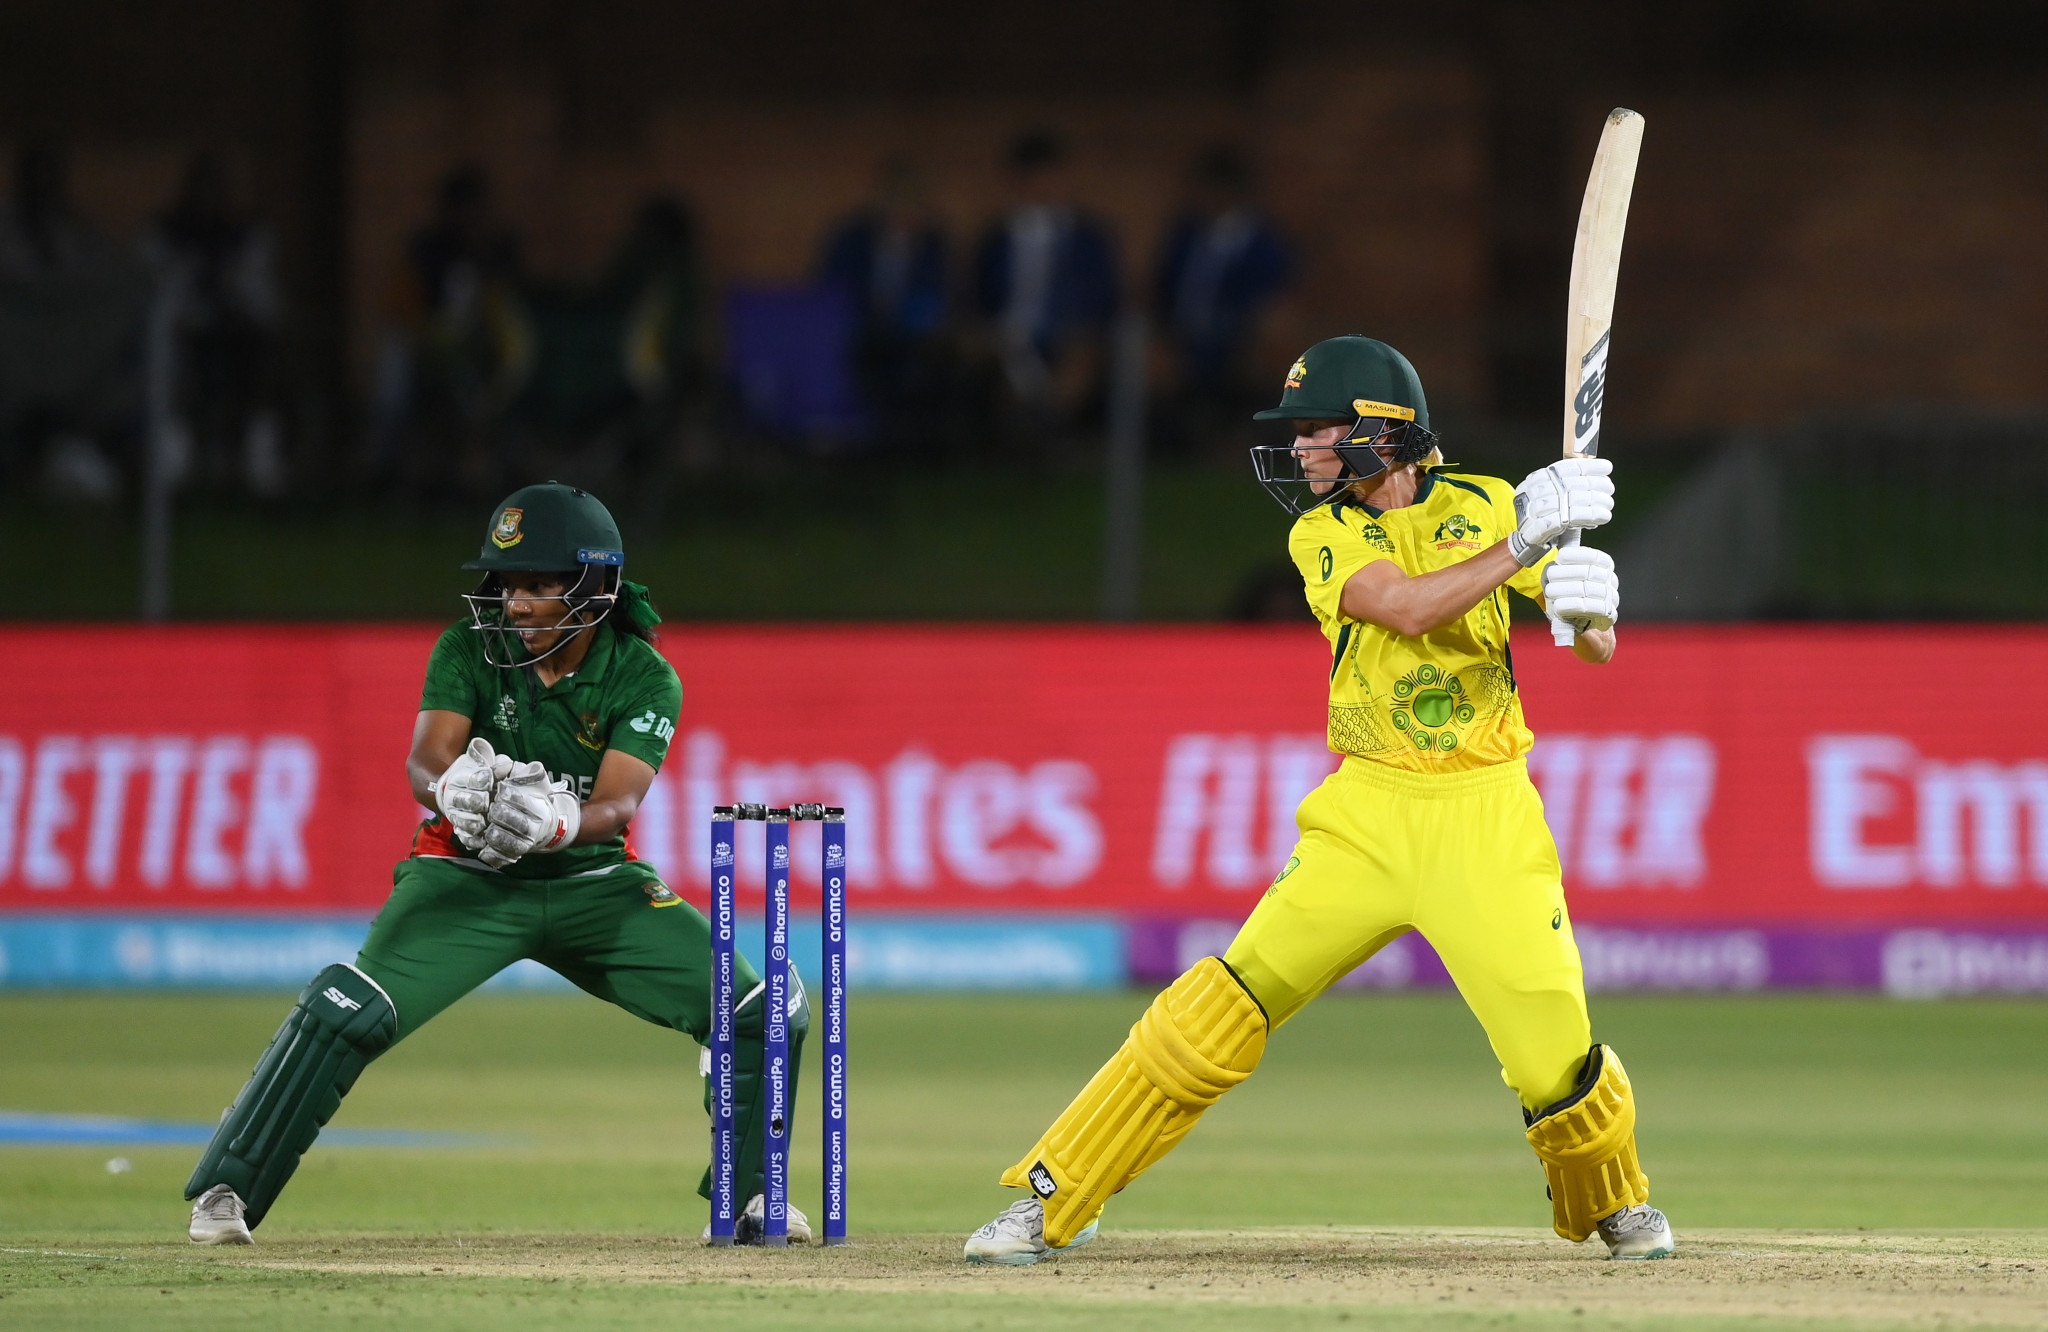 Holders Australia win second successive match at Women’s T20 World Cup 